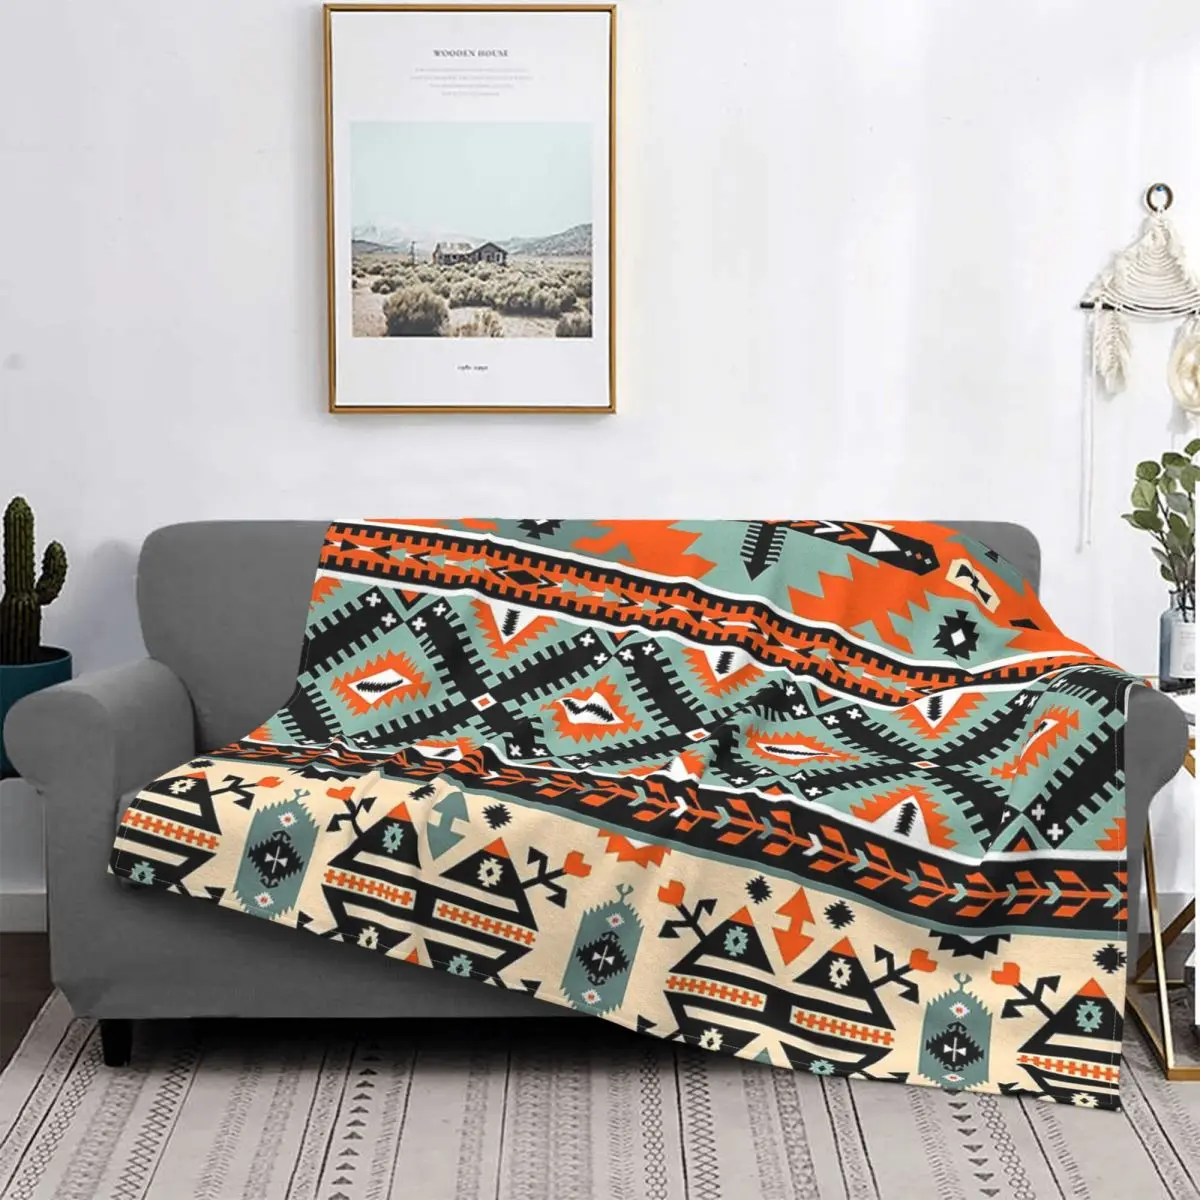 Boho Navajo Pattern Throw Blanket, Fleece Blanket Super Soft Cozy Lightweight Comfort Warm for Sofa Bed Couch Queen King Size